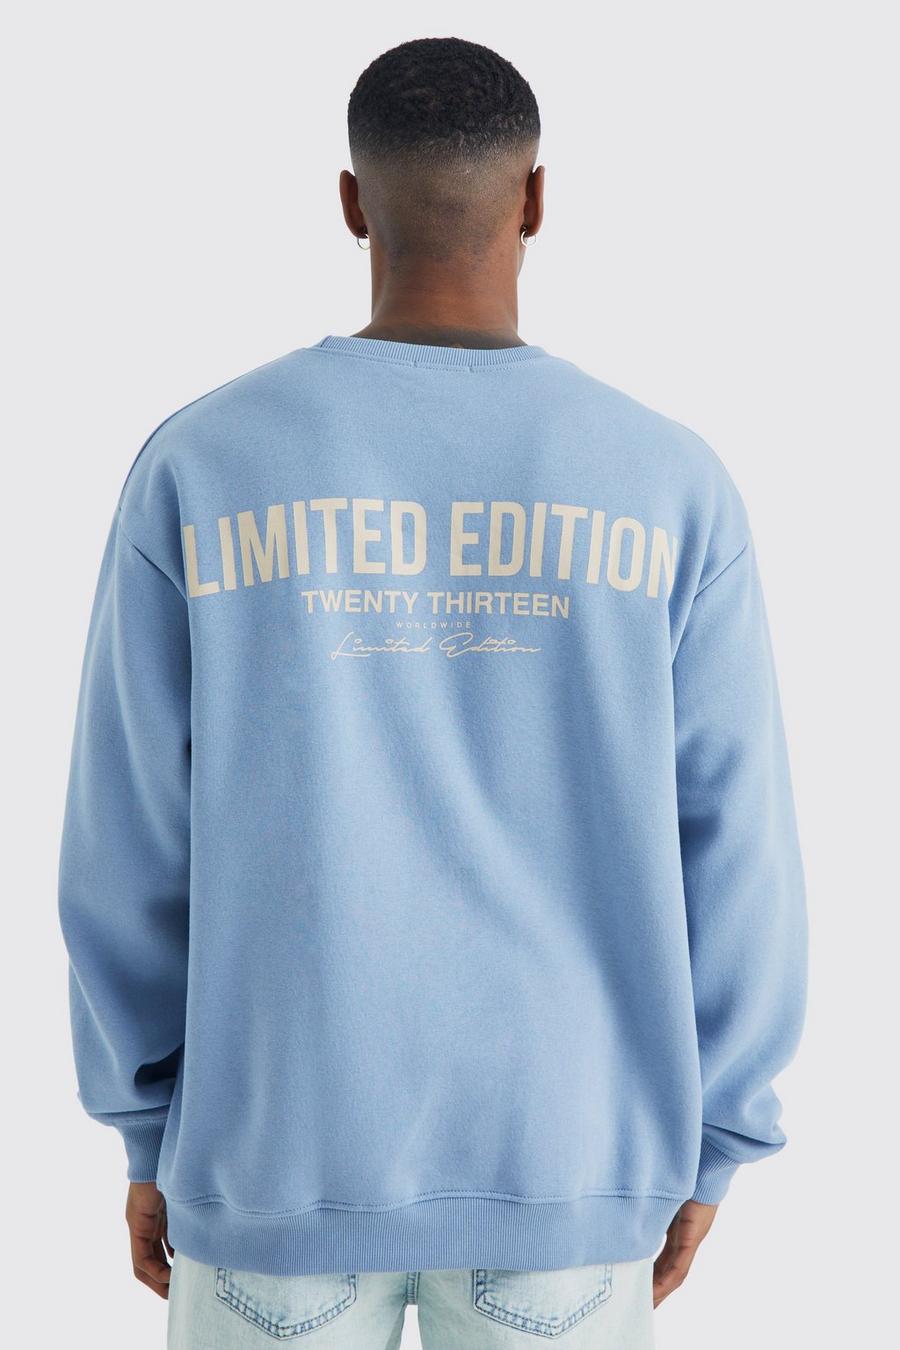 Dusty blue Oversized Limited Edition Text Print Sweatshirt